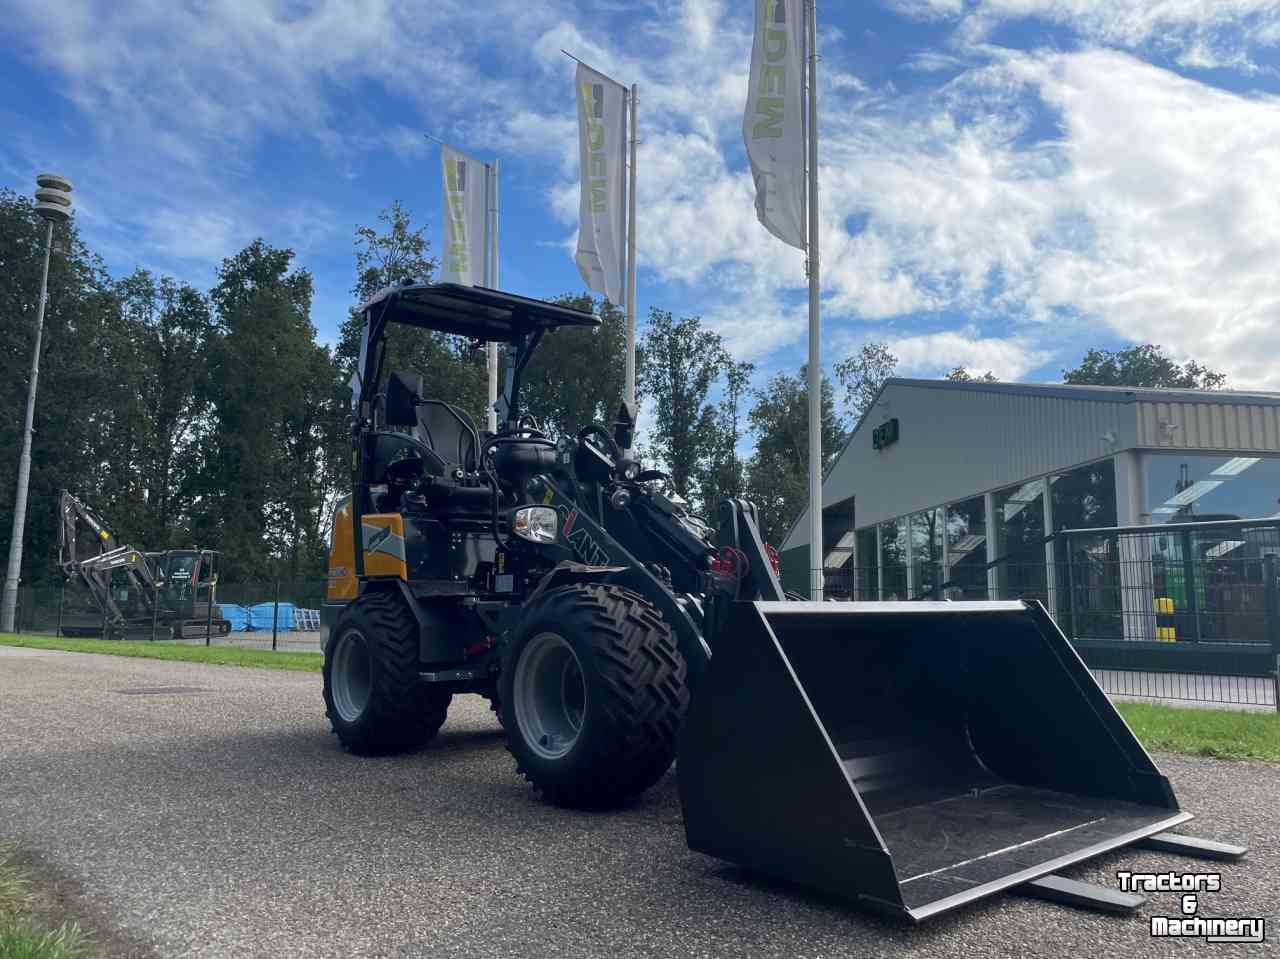 Radlader Giant Giant G2300 X-tra shovel laadschop wheelloader